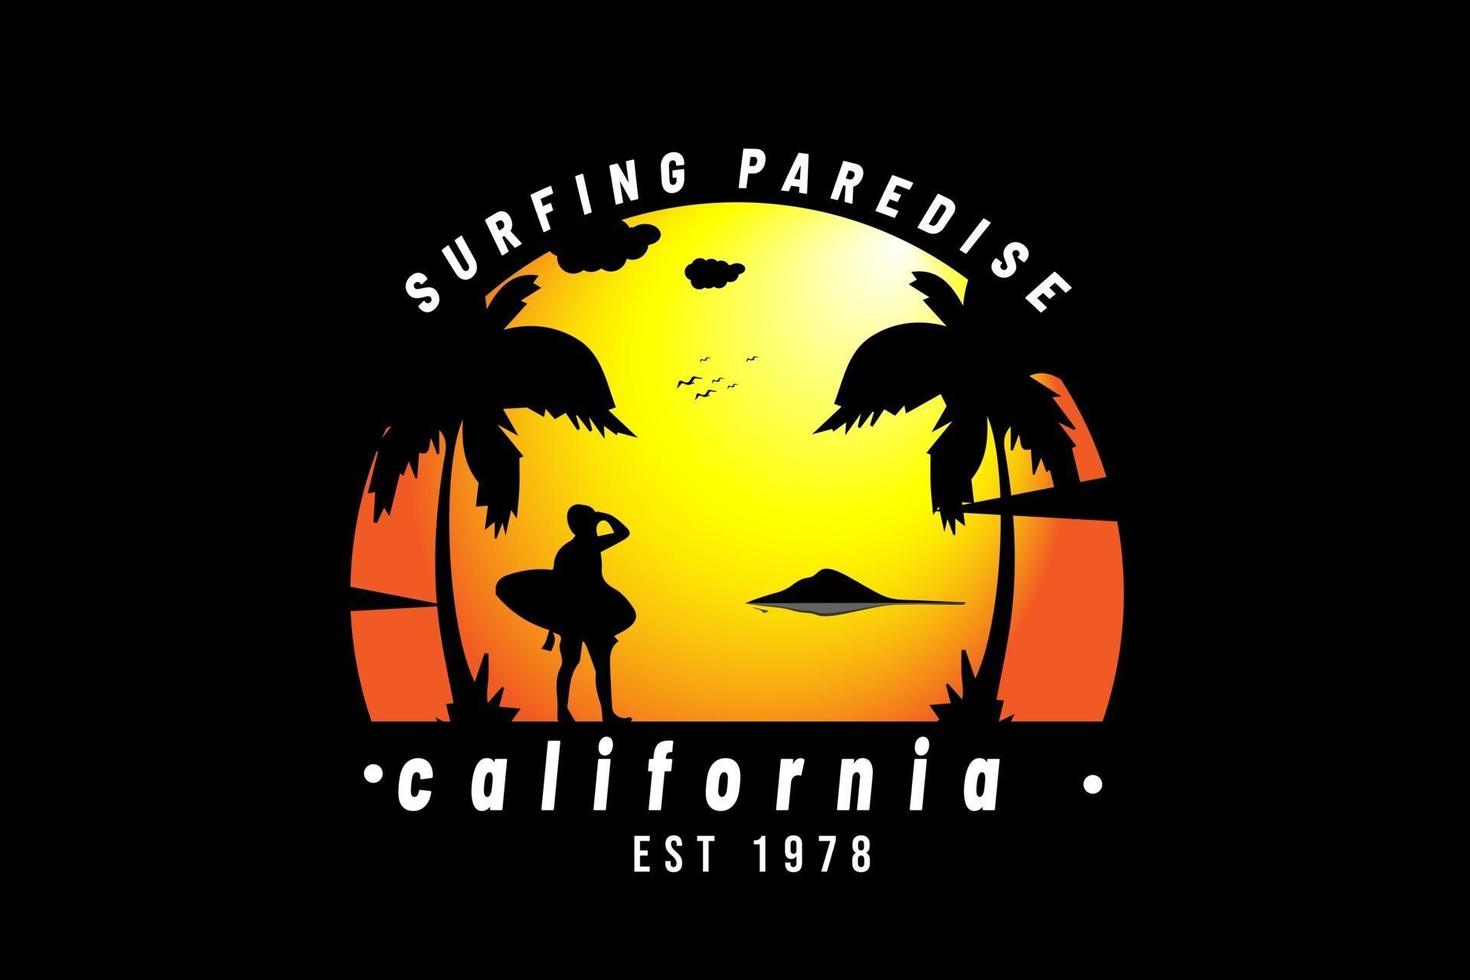 surfing paradise california est 1978 color orange and black vector